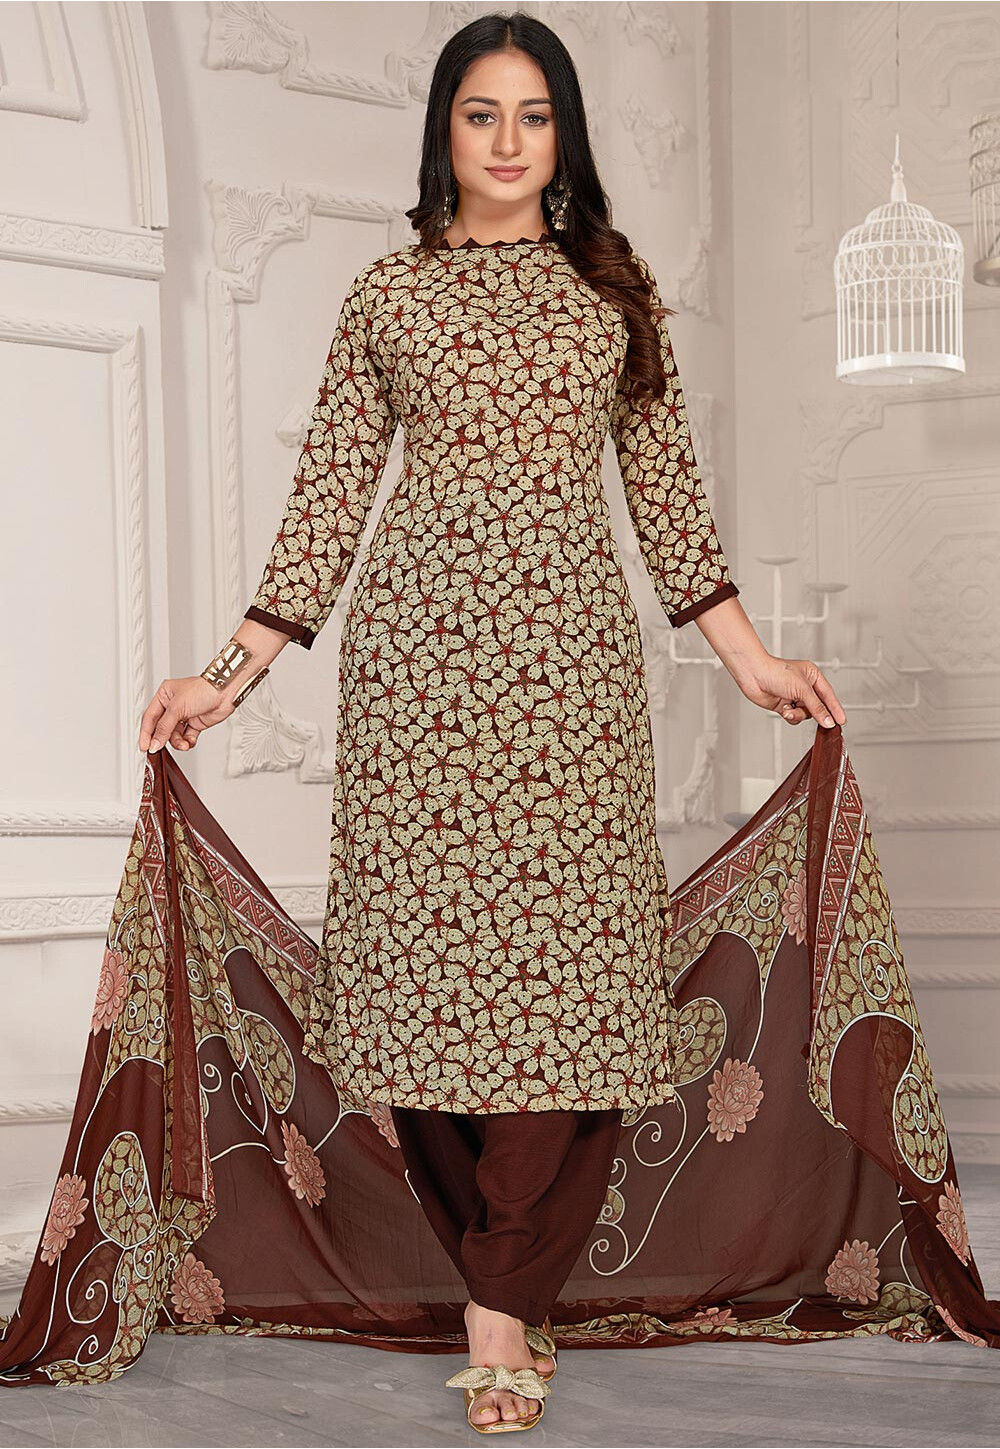 Floral print Punjabi Suit| Simple Punjabi Suit| AllOver Printed Suit  Design|| Punjabi Printed Suit|